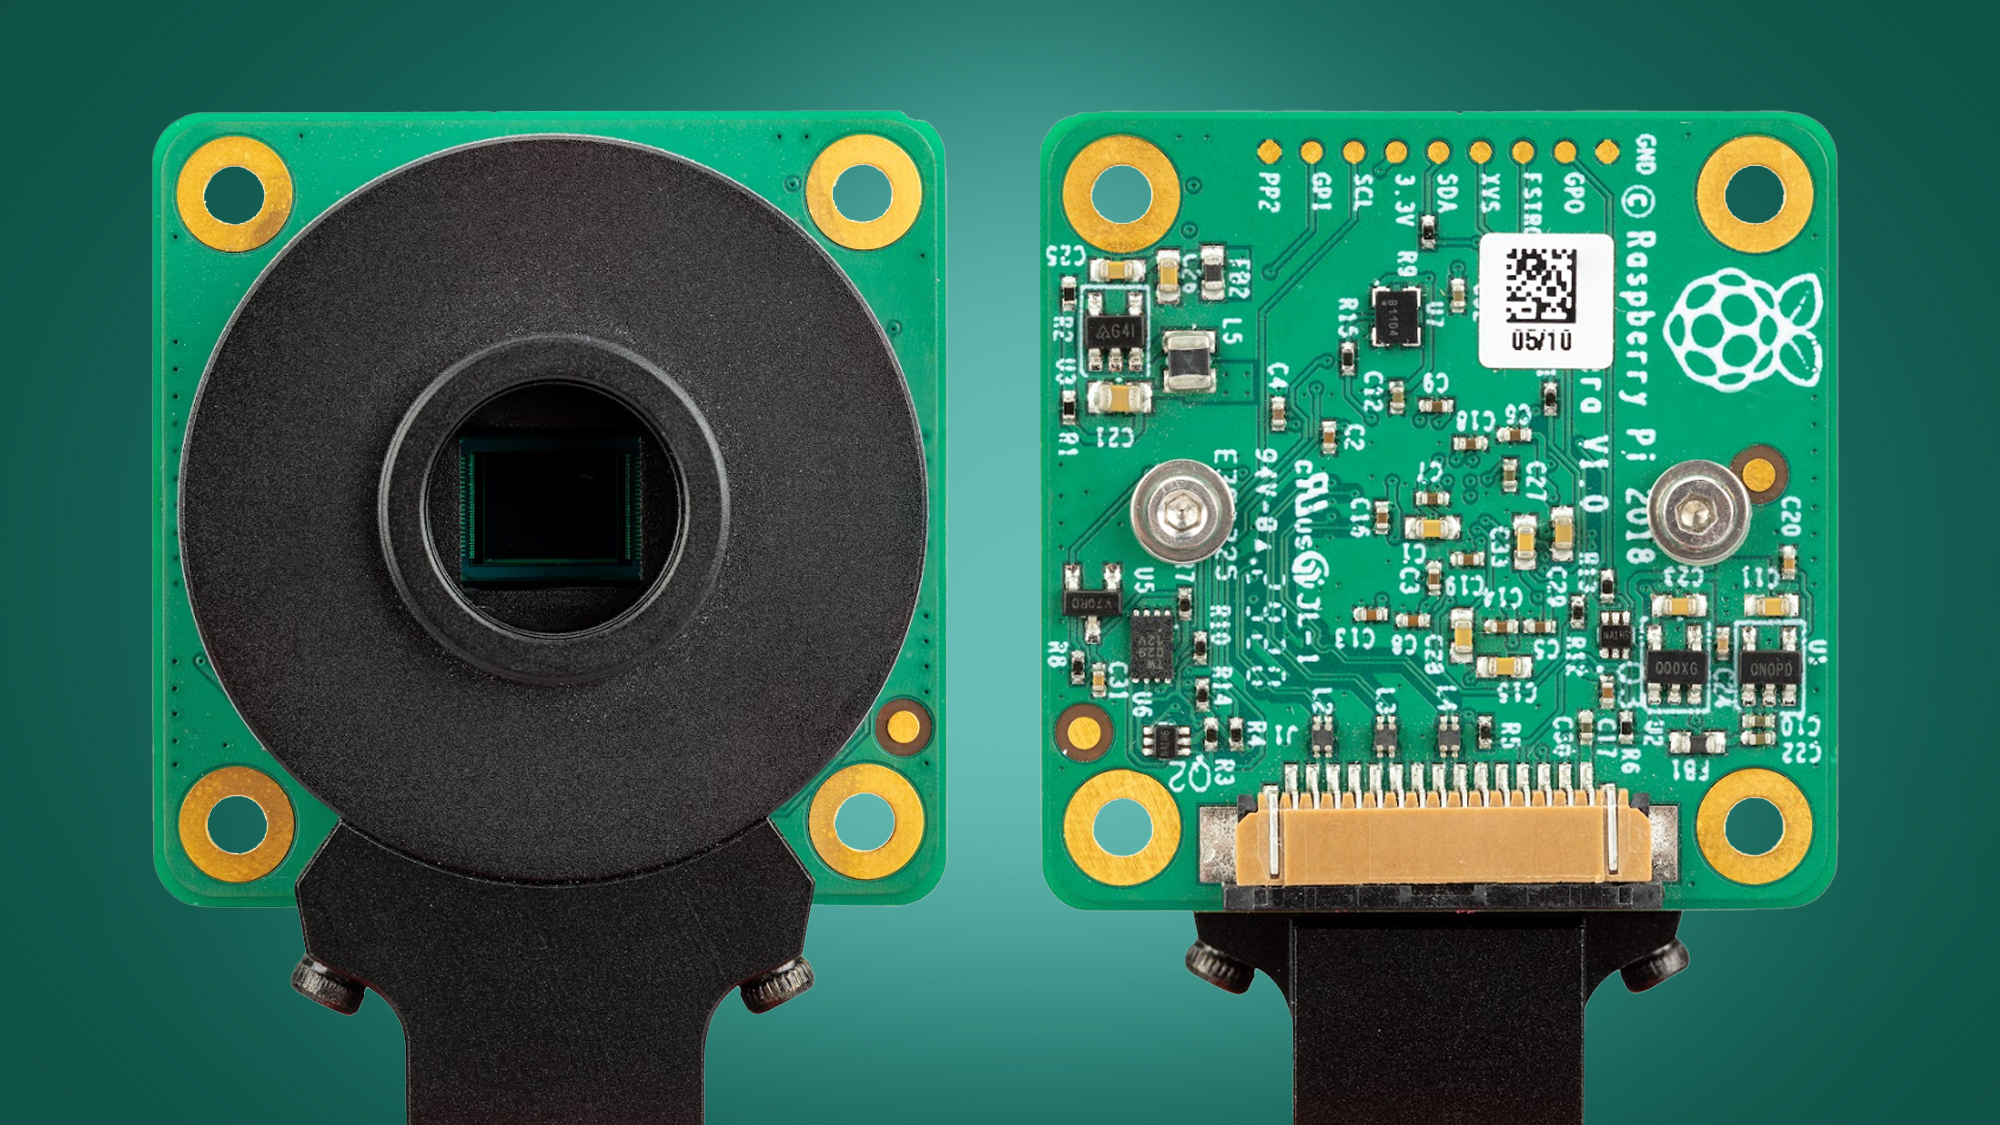 The Raspberry Pi High Качественная камера с новым креплением M12 на зеленом фоне